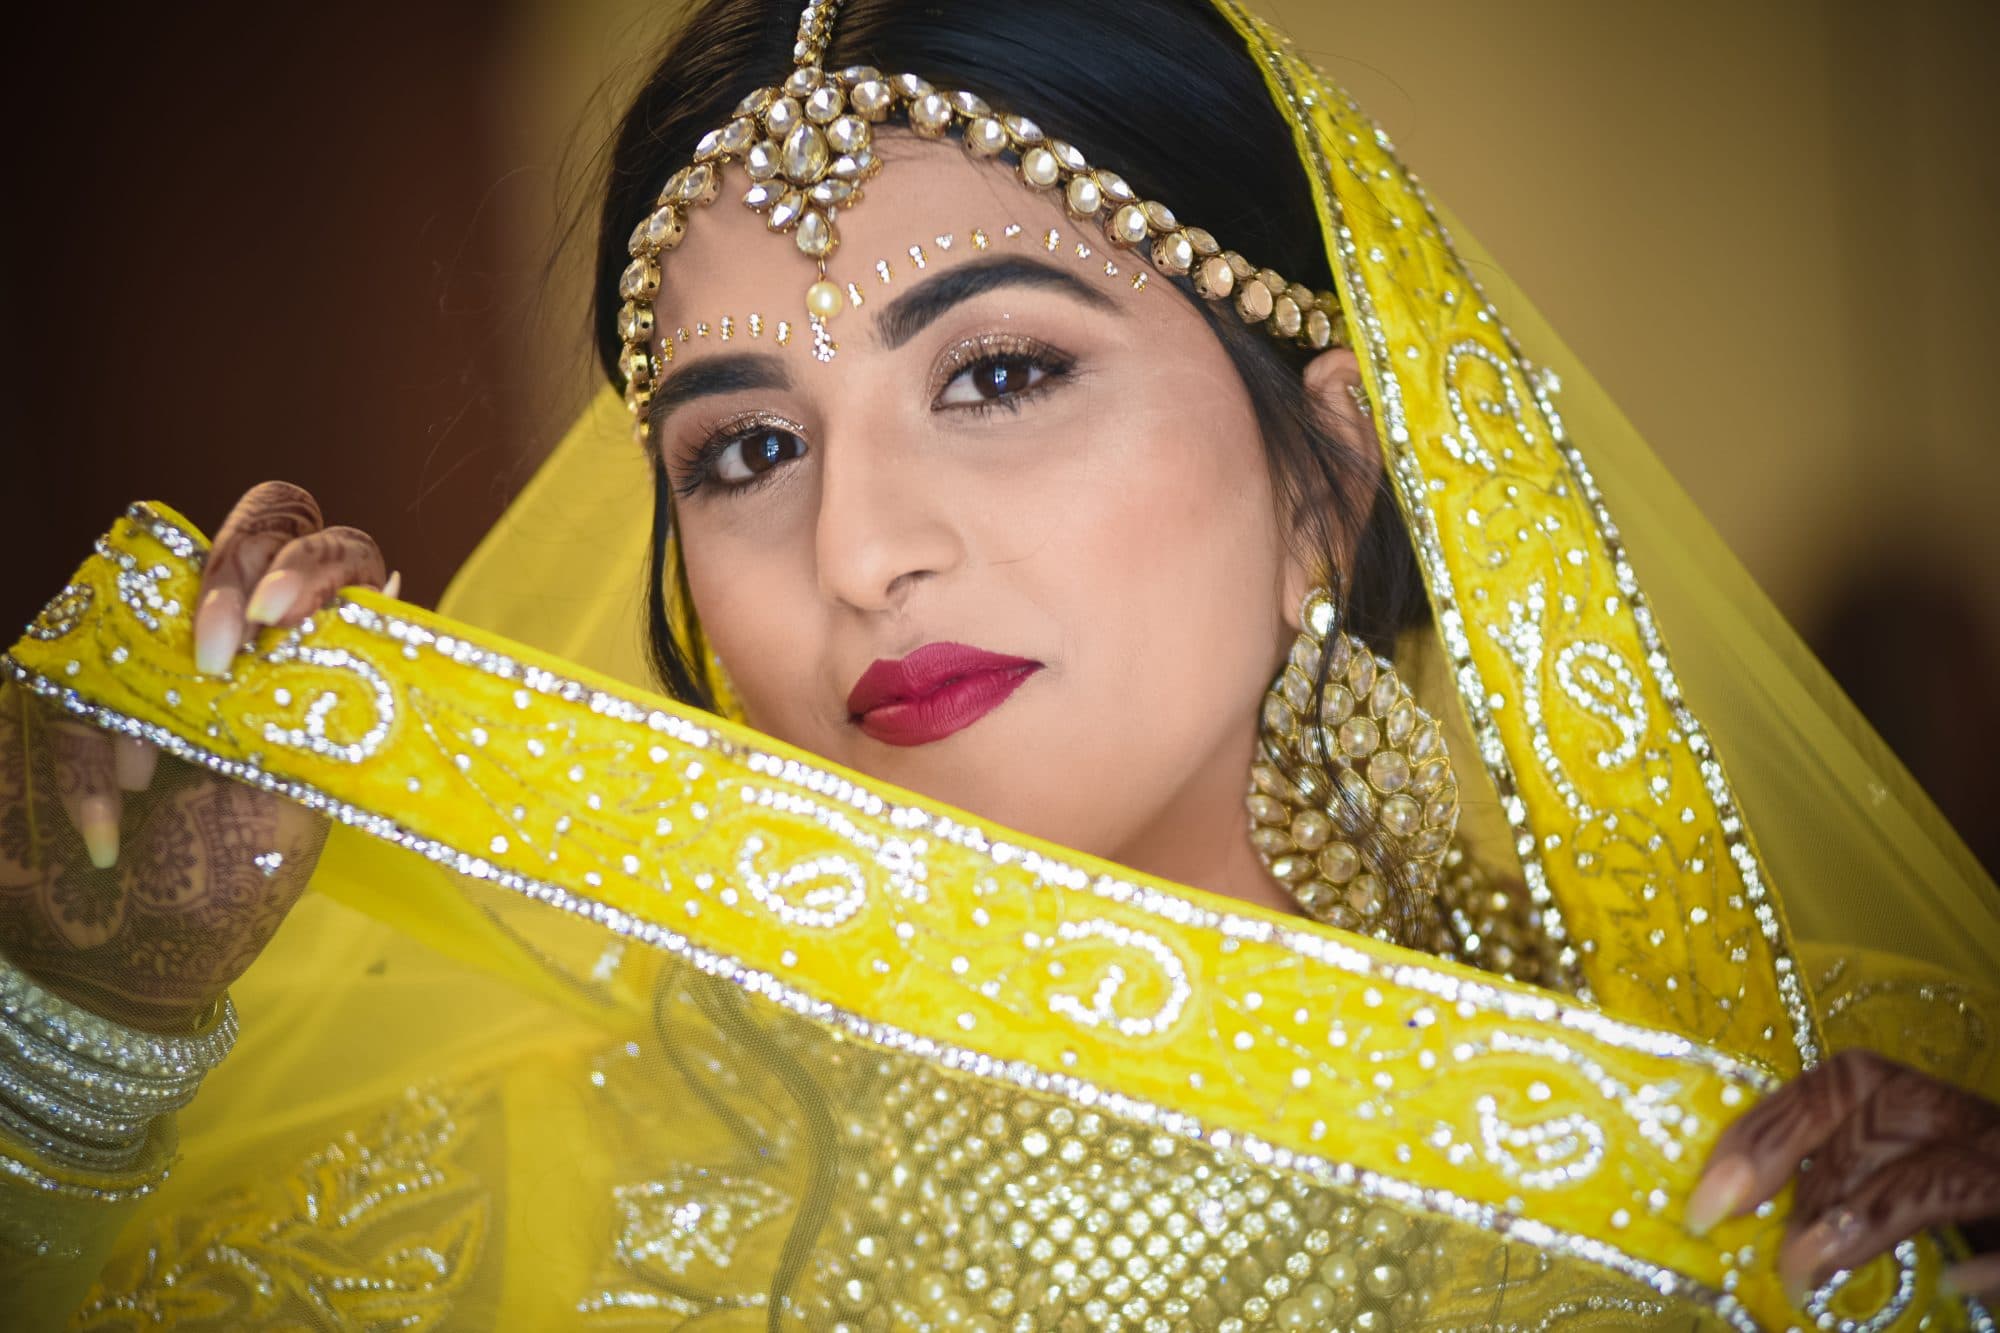 Chris Gillyard Photography - beautiful Indian bride showing off beading on yellow sari